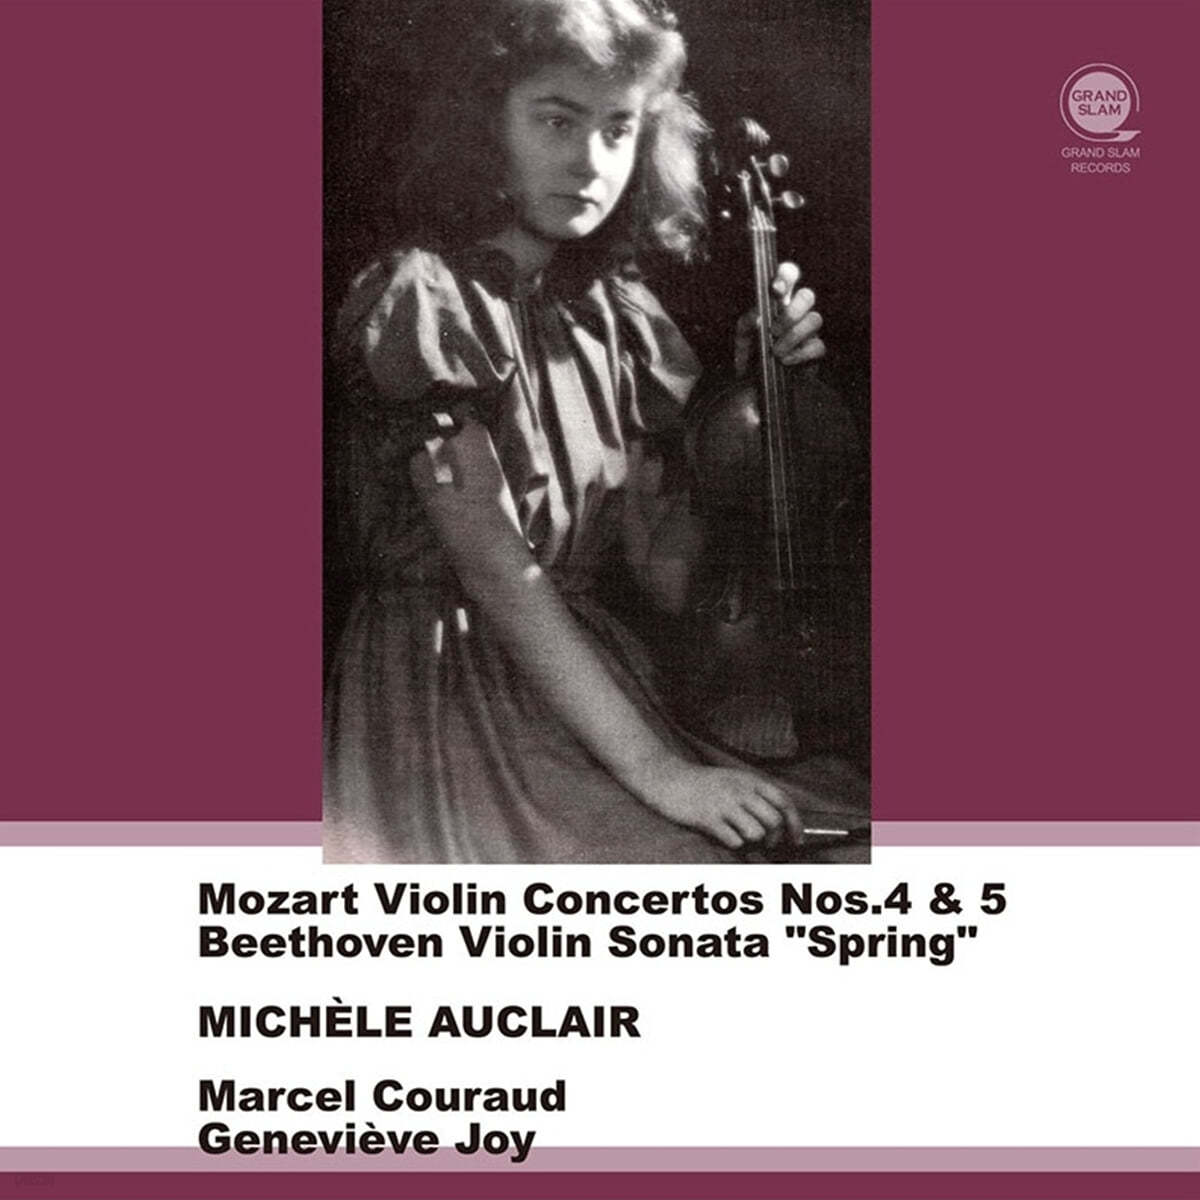 Michele Auclair 모차르트: 바이올린 협주곡 4, 5번 / 베토벤: 바이올린 소나타 '봄' (Mozart: Violin Concertos K.218, 219 / Beethoven: Violin Sonata Op.24 "Spring") 